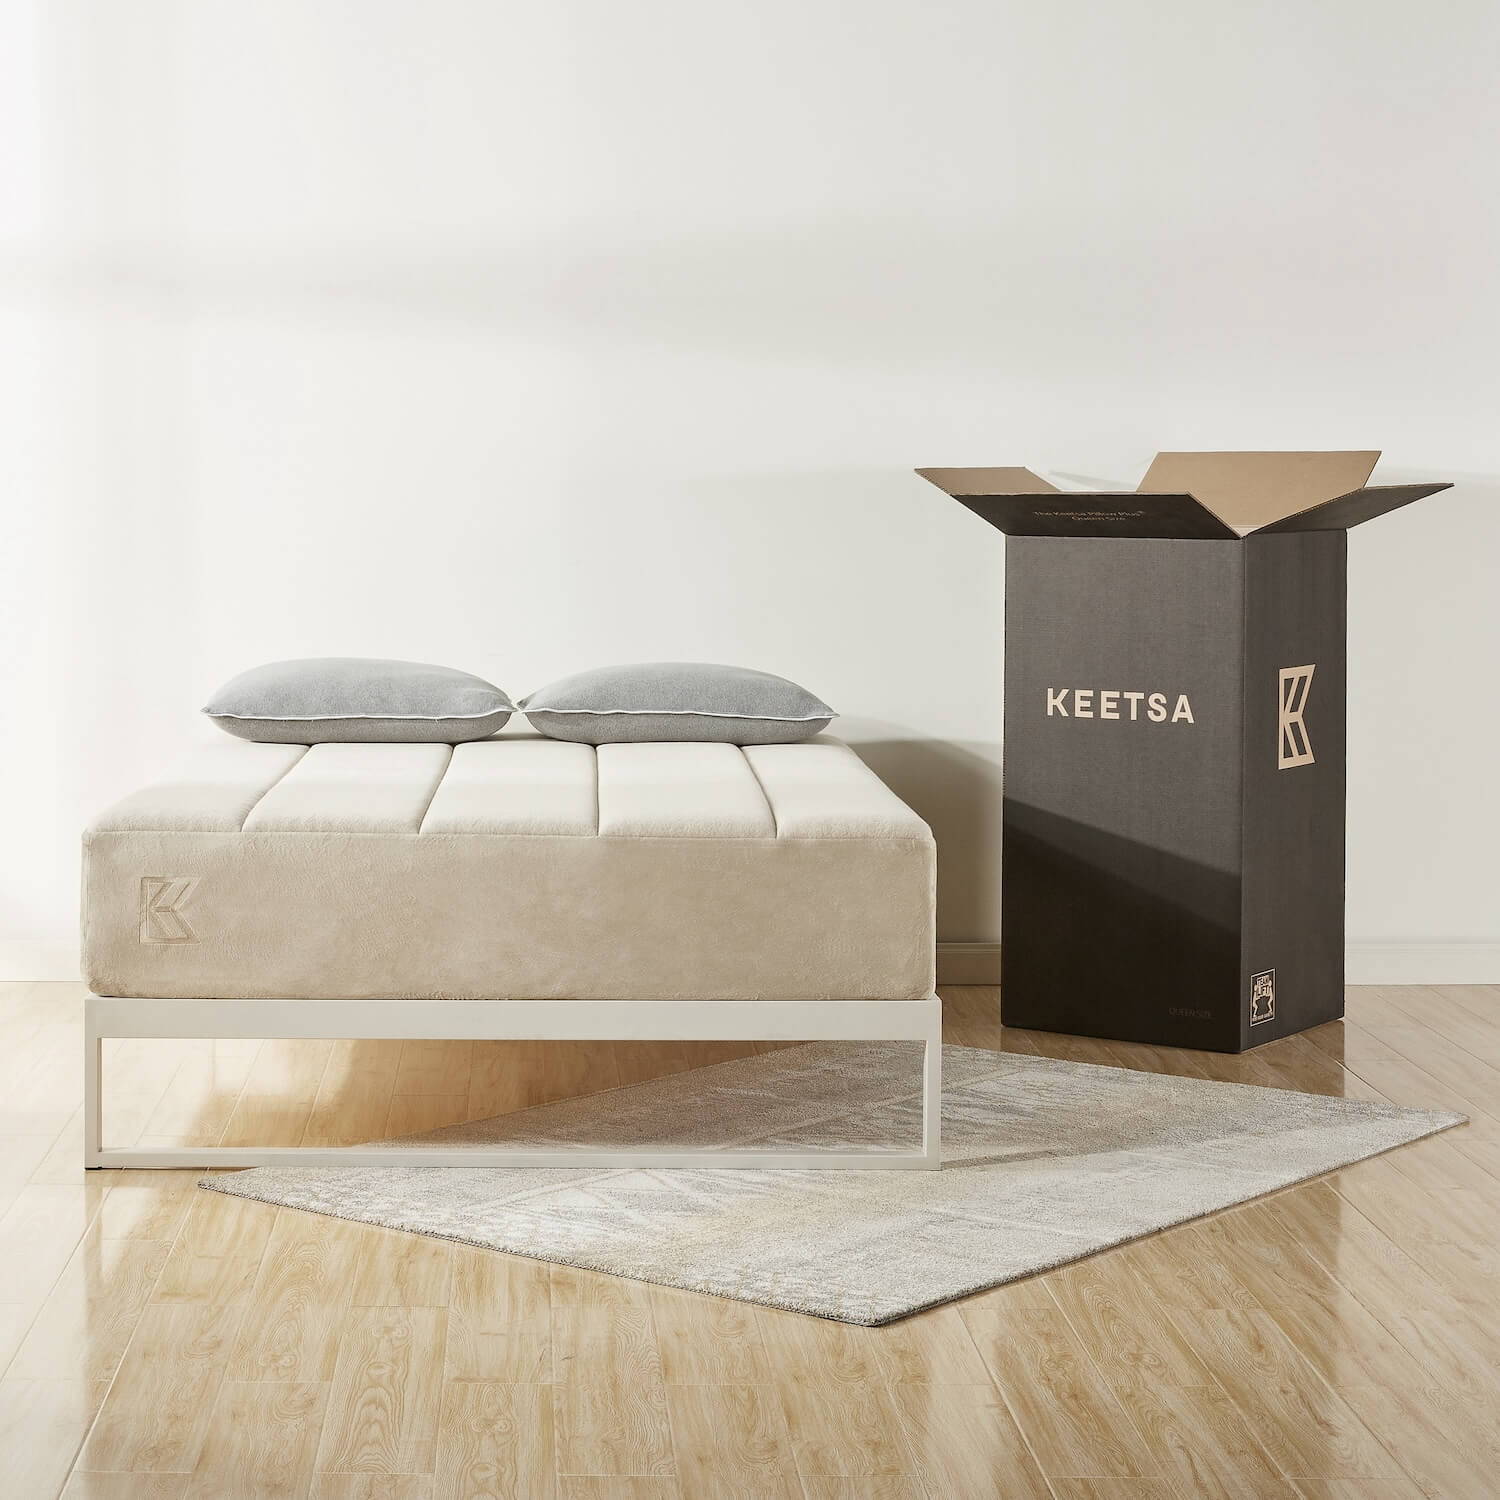 The Keetsa Plus Mattress in bedroom.